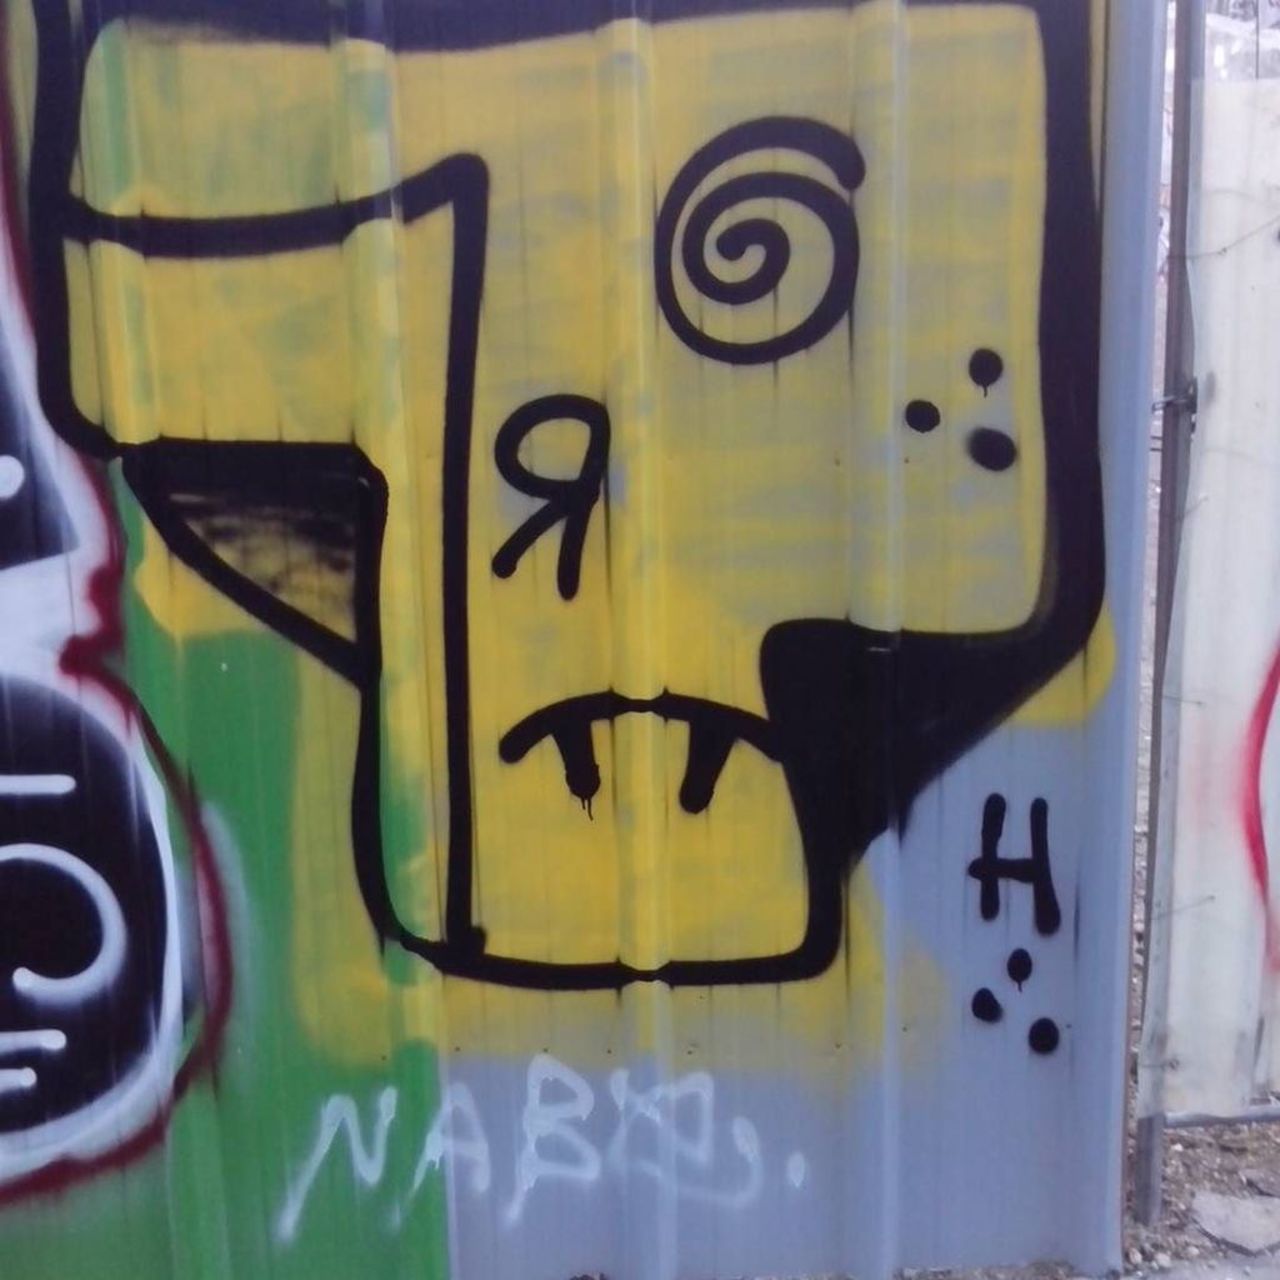 #streetart #streetarteverywhere #streetshot #graffitiart #graffiti #arturbain #urbanart  #mur #mural #wall #wallart… https://t.co/6s8tmk93VT